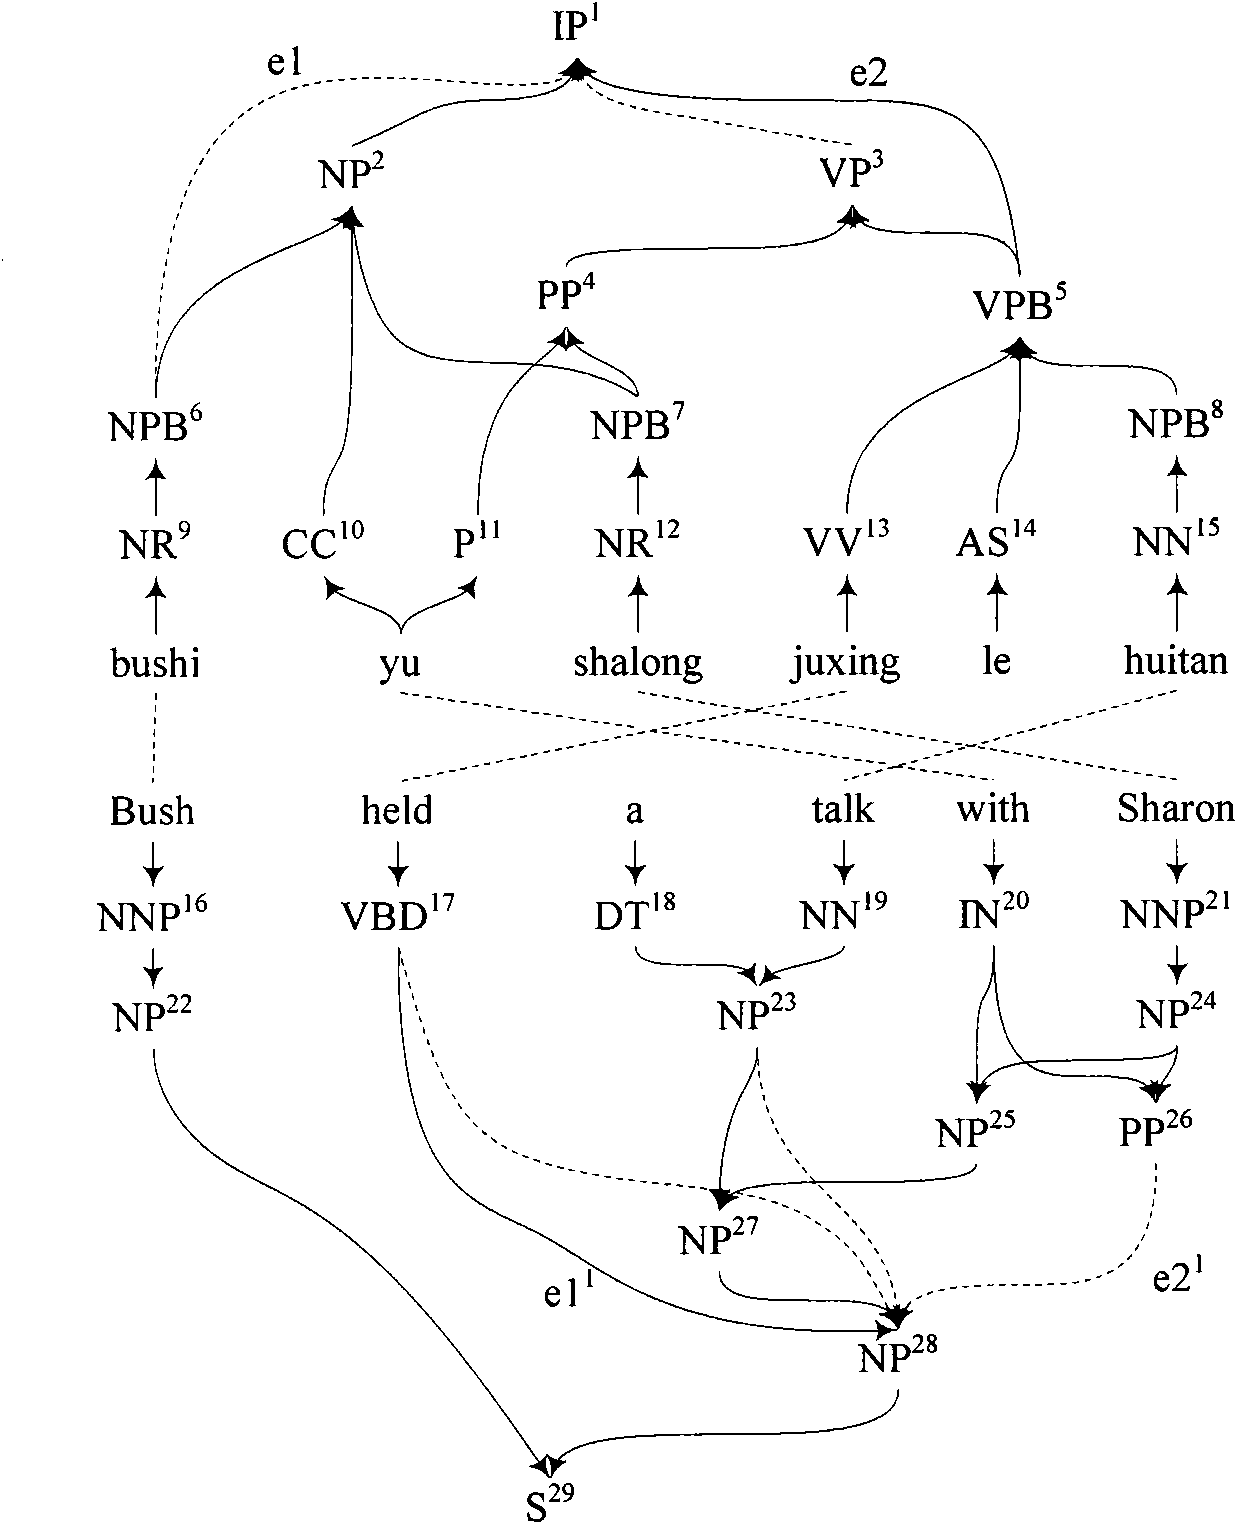 Translation rule extract method and translation method based on tree-to-tree translation model